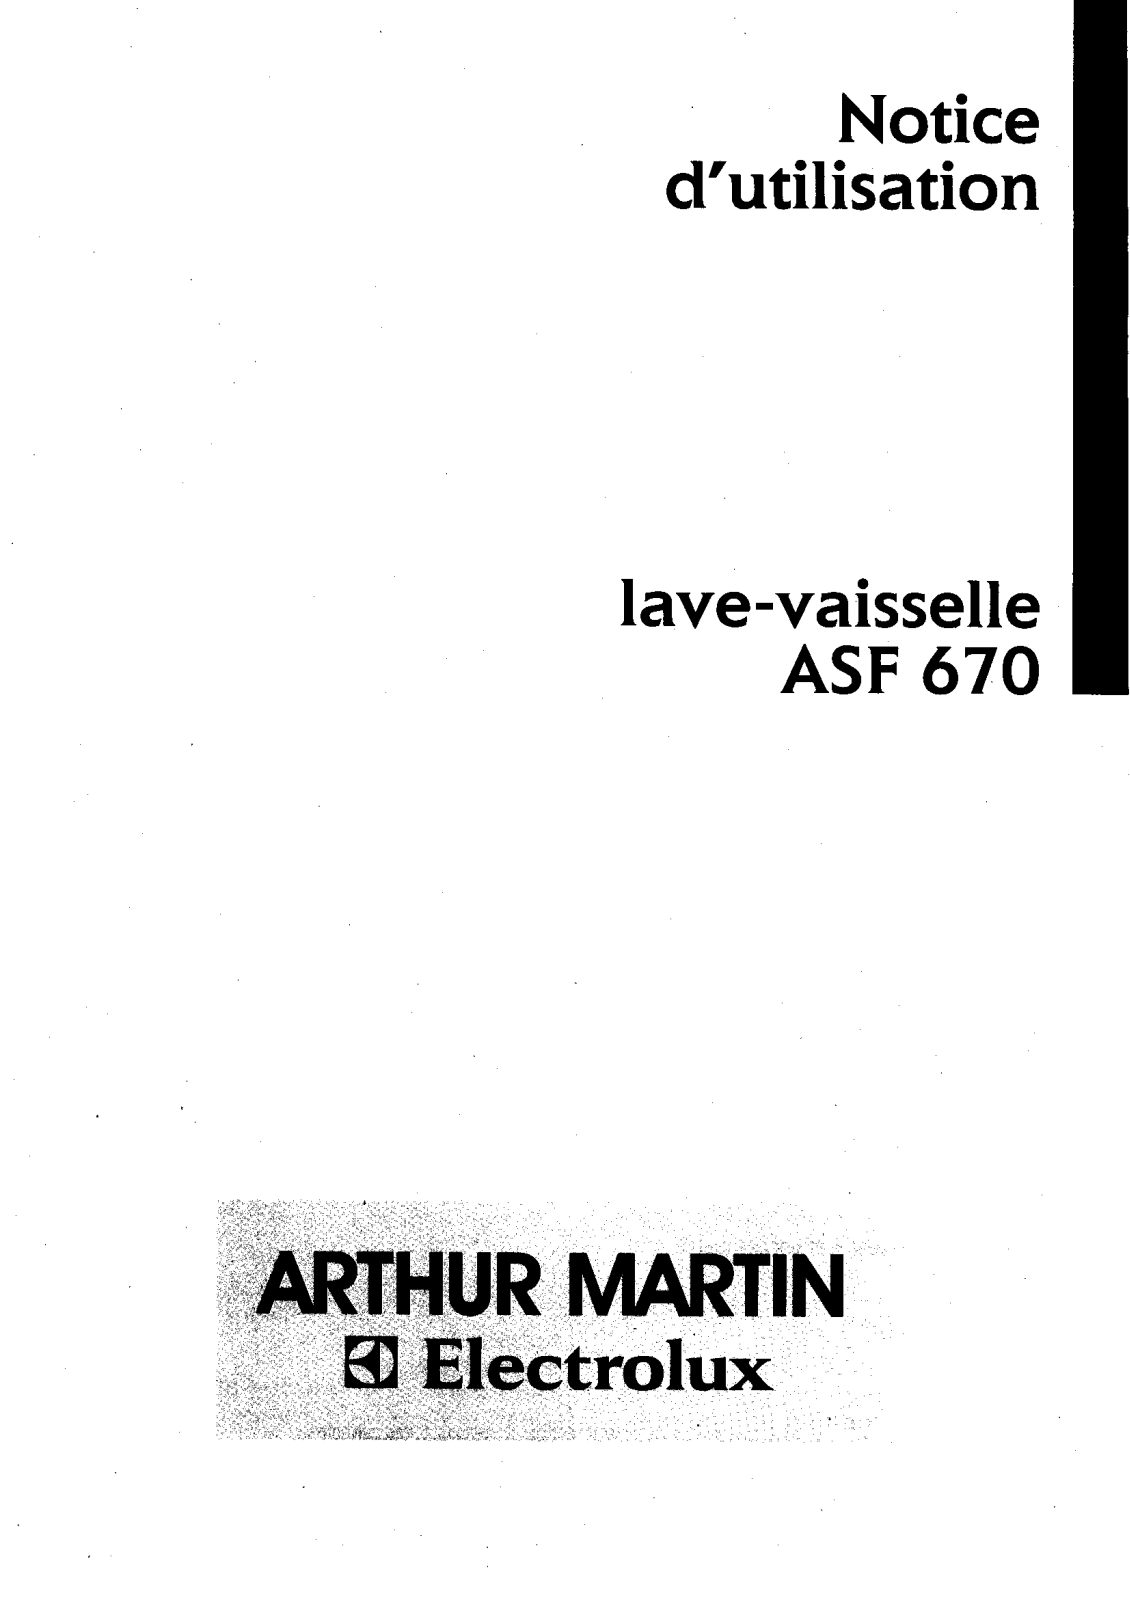 Arthur martin ASF670 User Manual